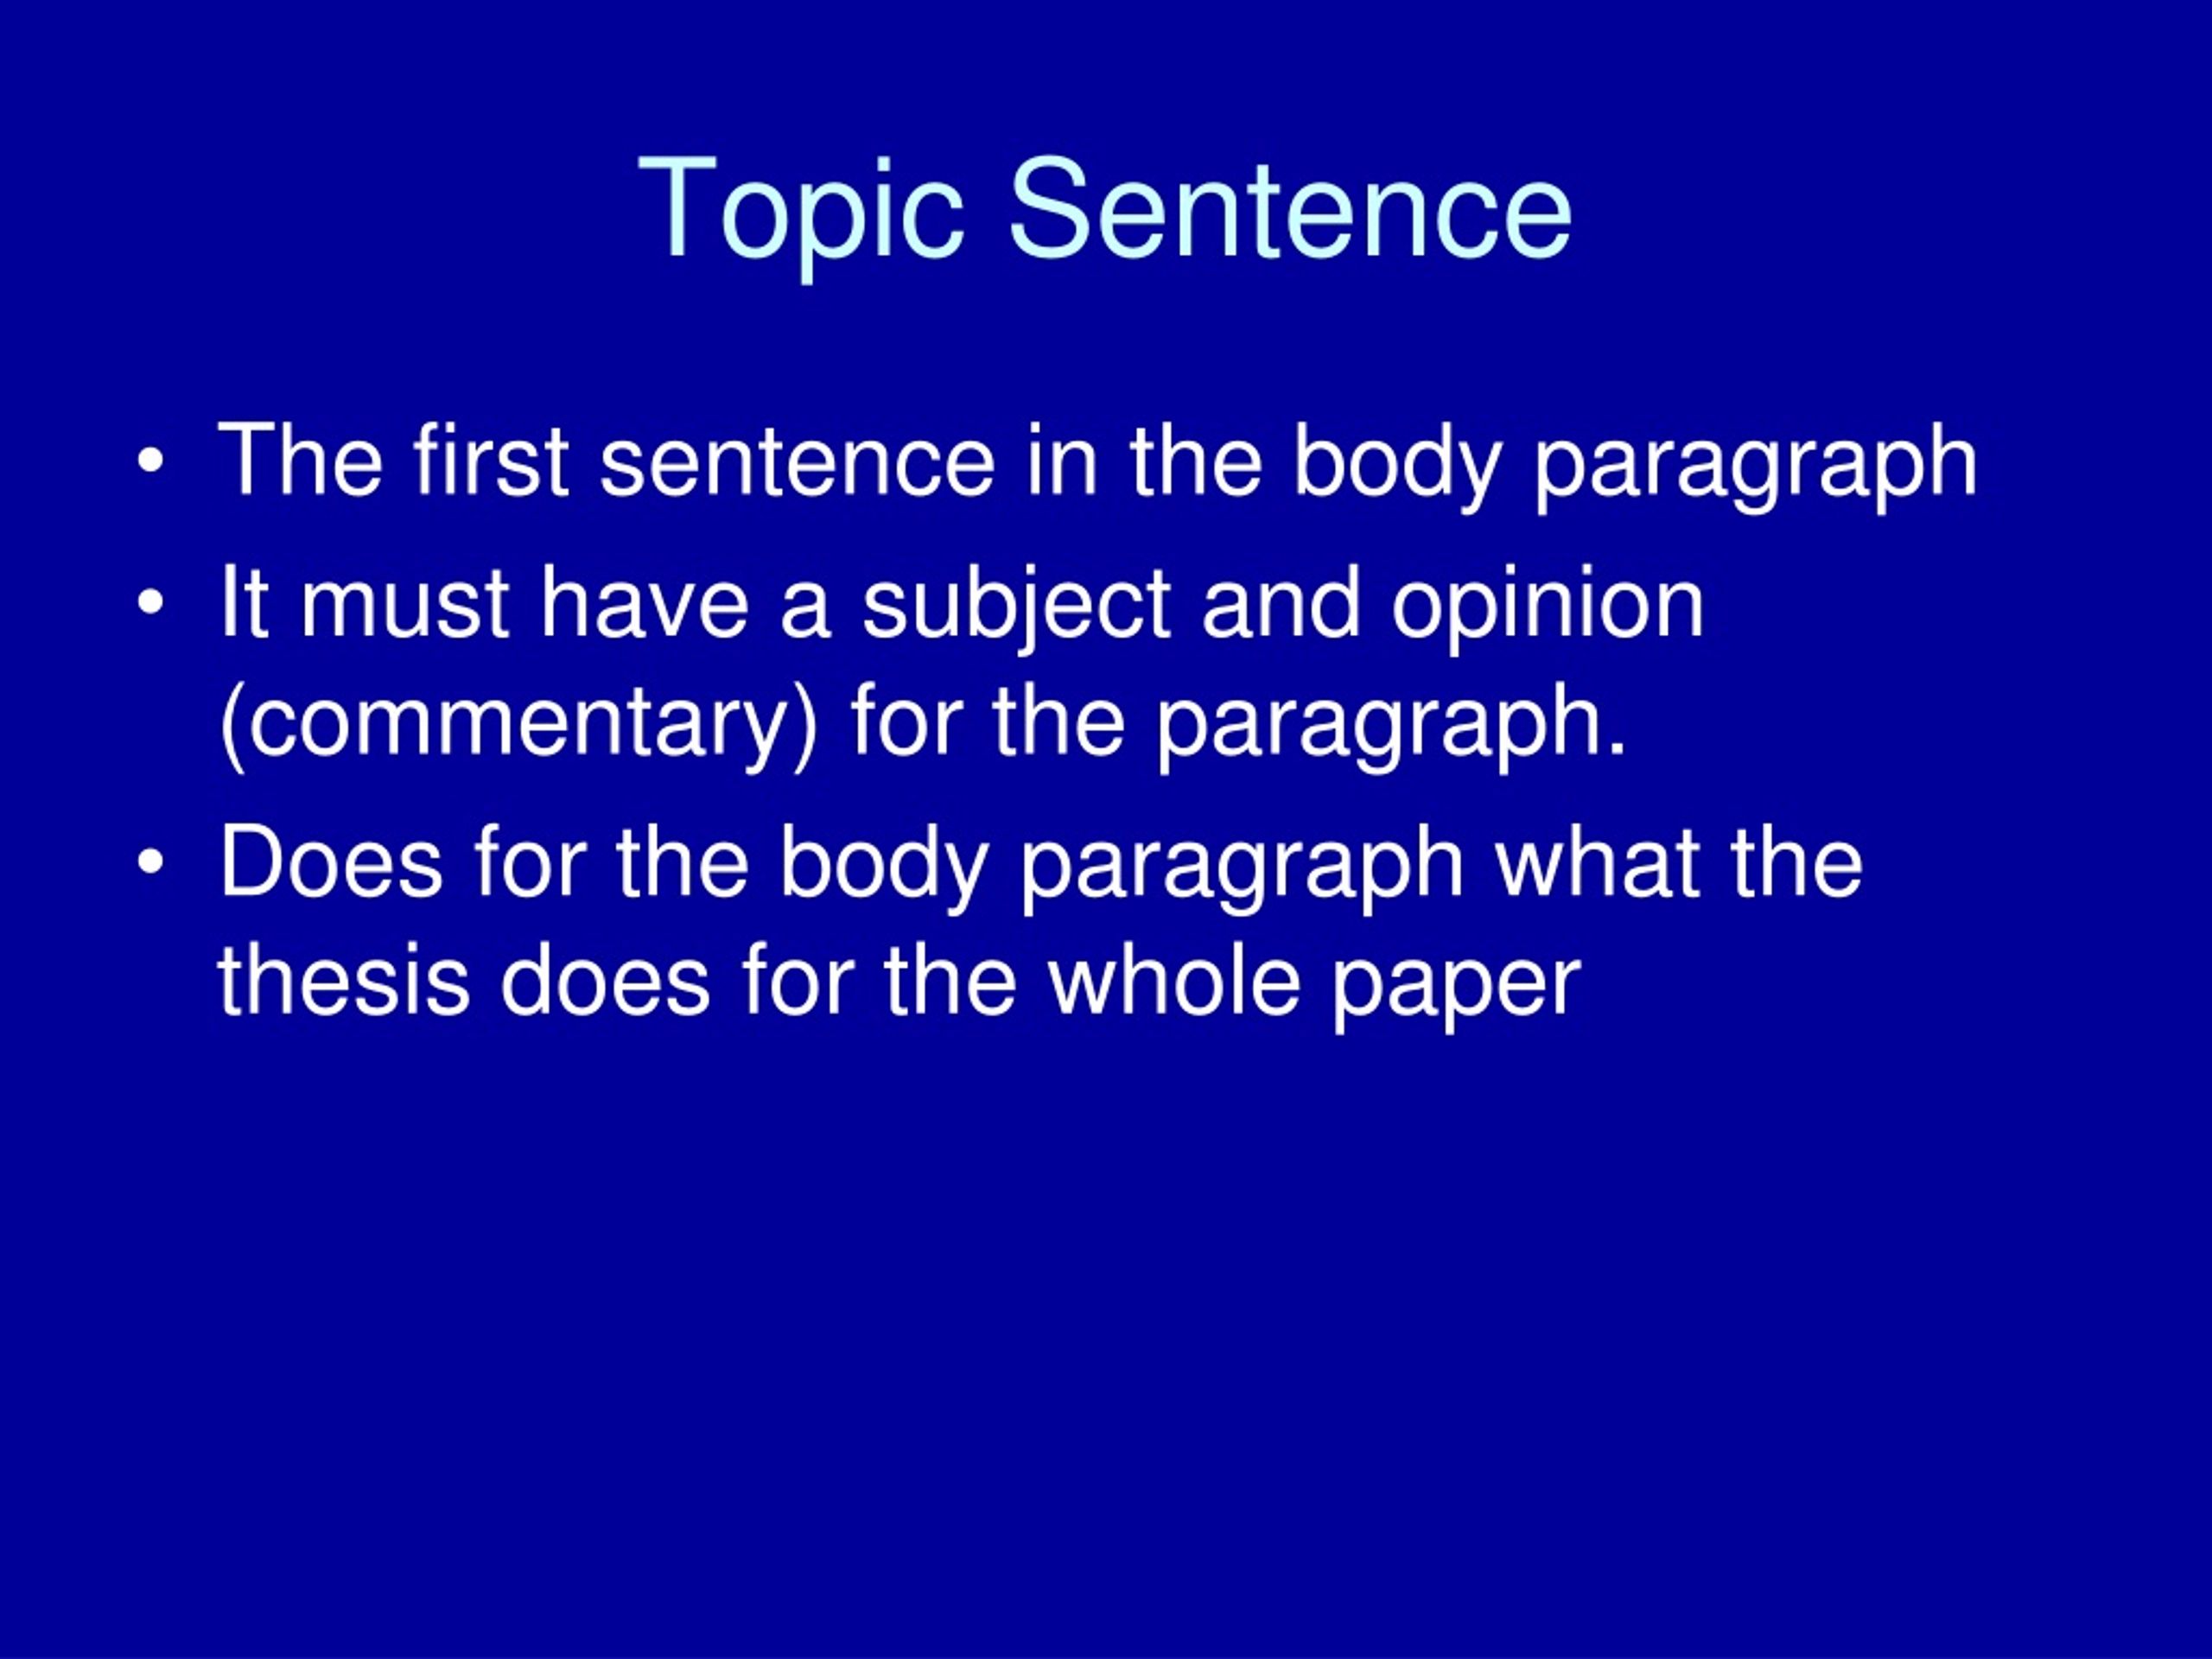 16-best-images-of-topic-sentences-worksheets-pdf-writing-topic-sentences-worksheets-topic